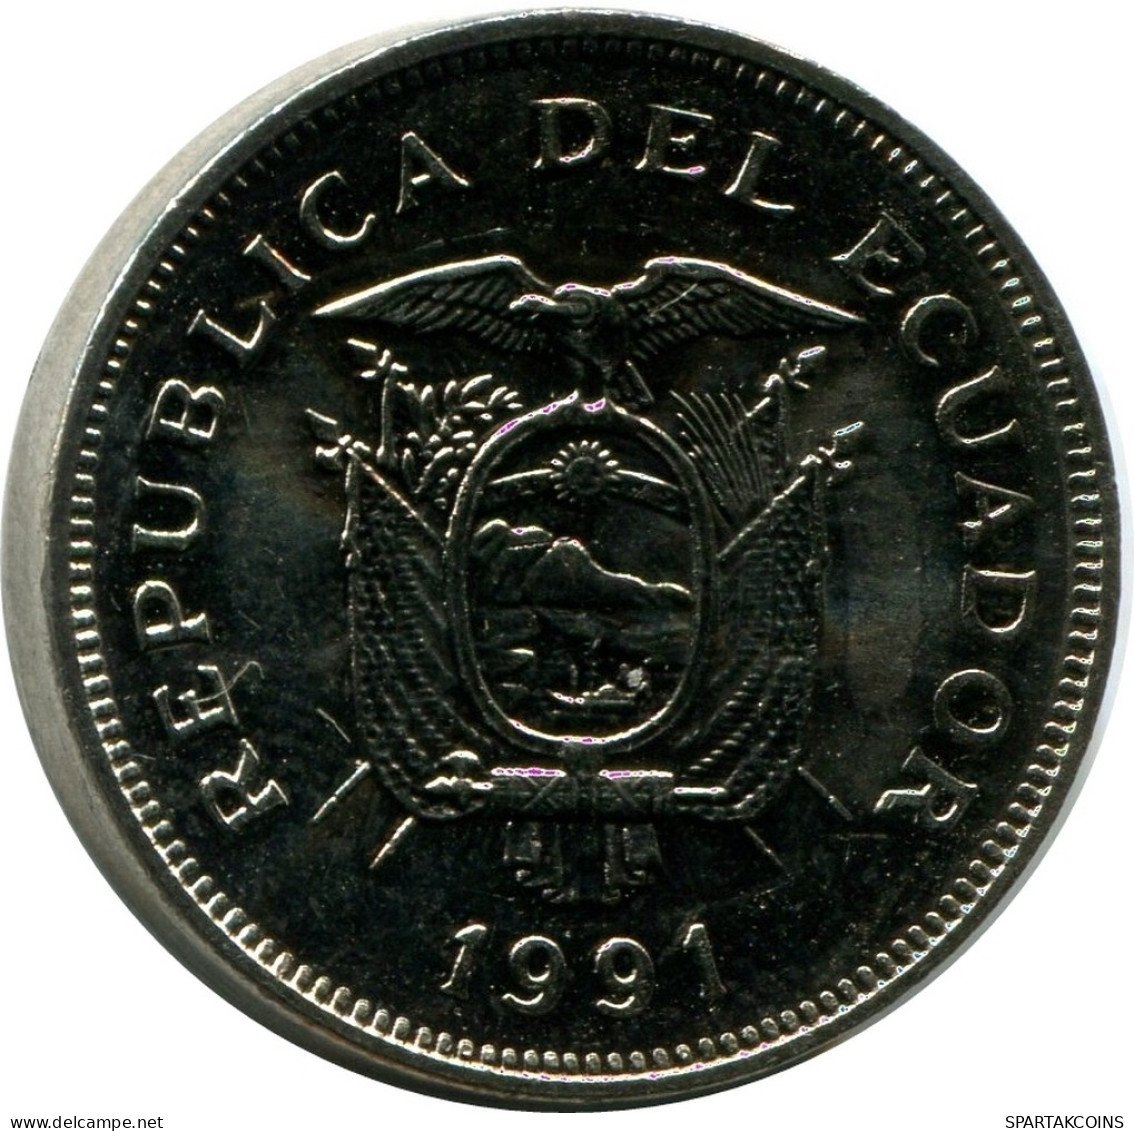 20 SUCRE 1991 ECUADOR UNC Coin #M10183.U - Ecuador